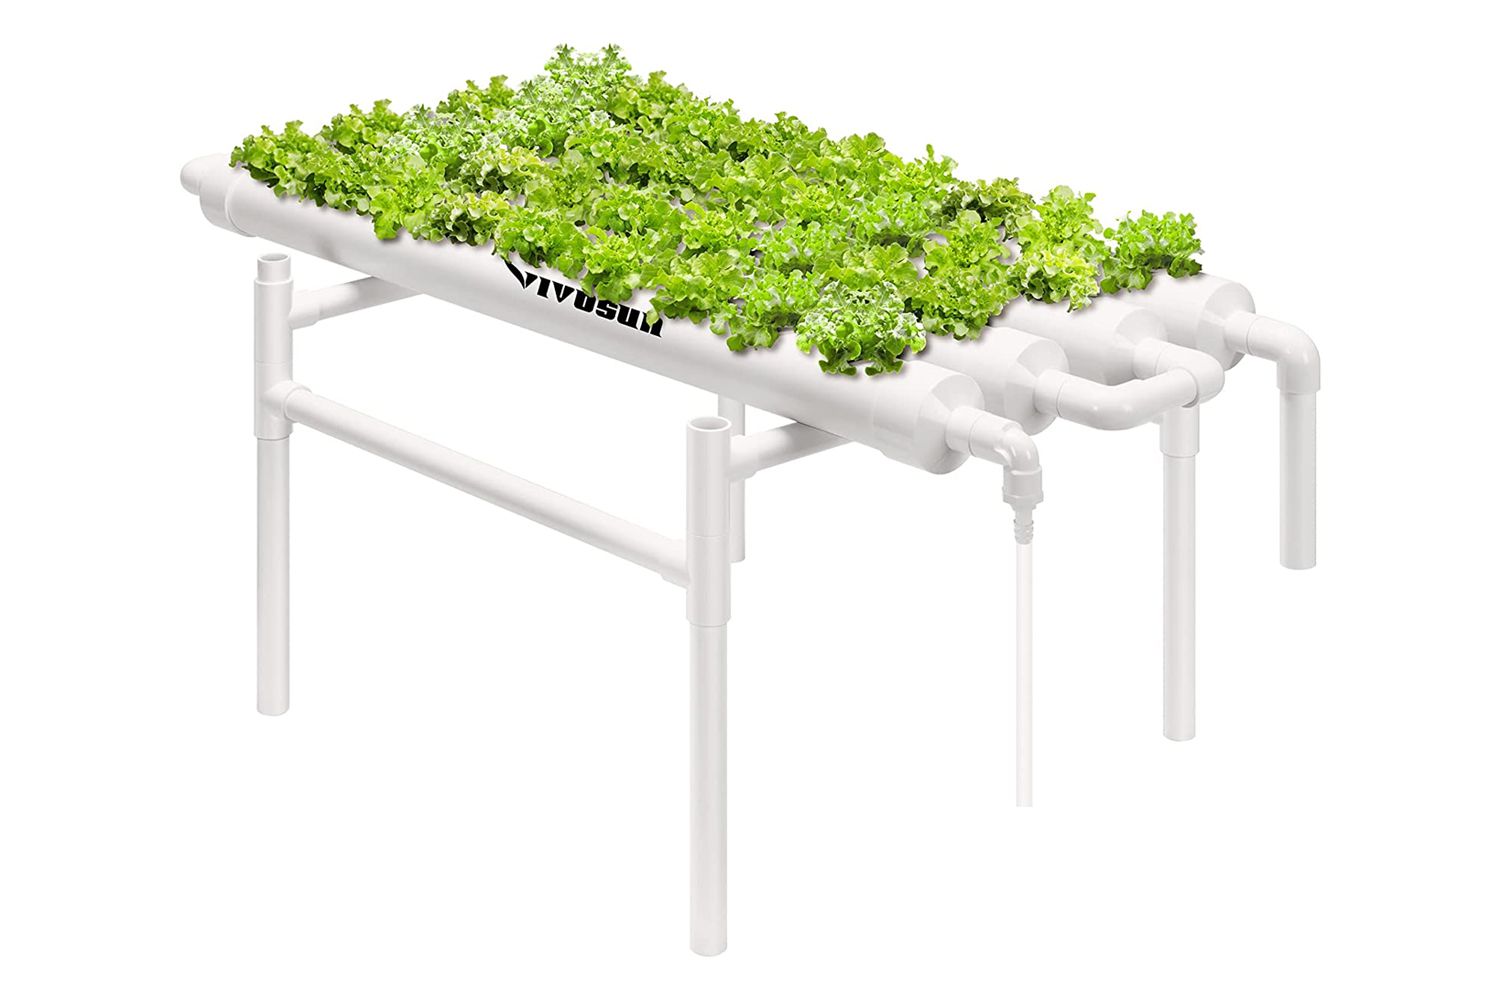 vivoson-hydroponic-growing-kit